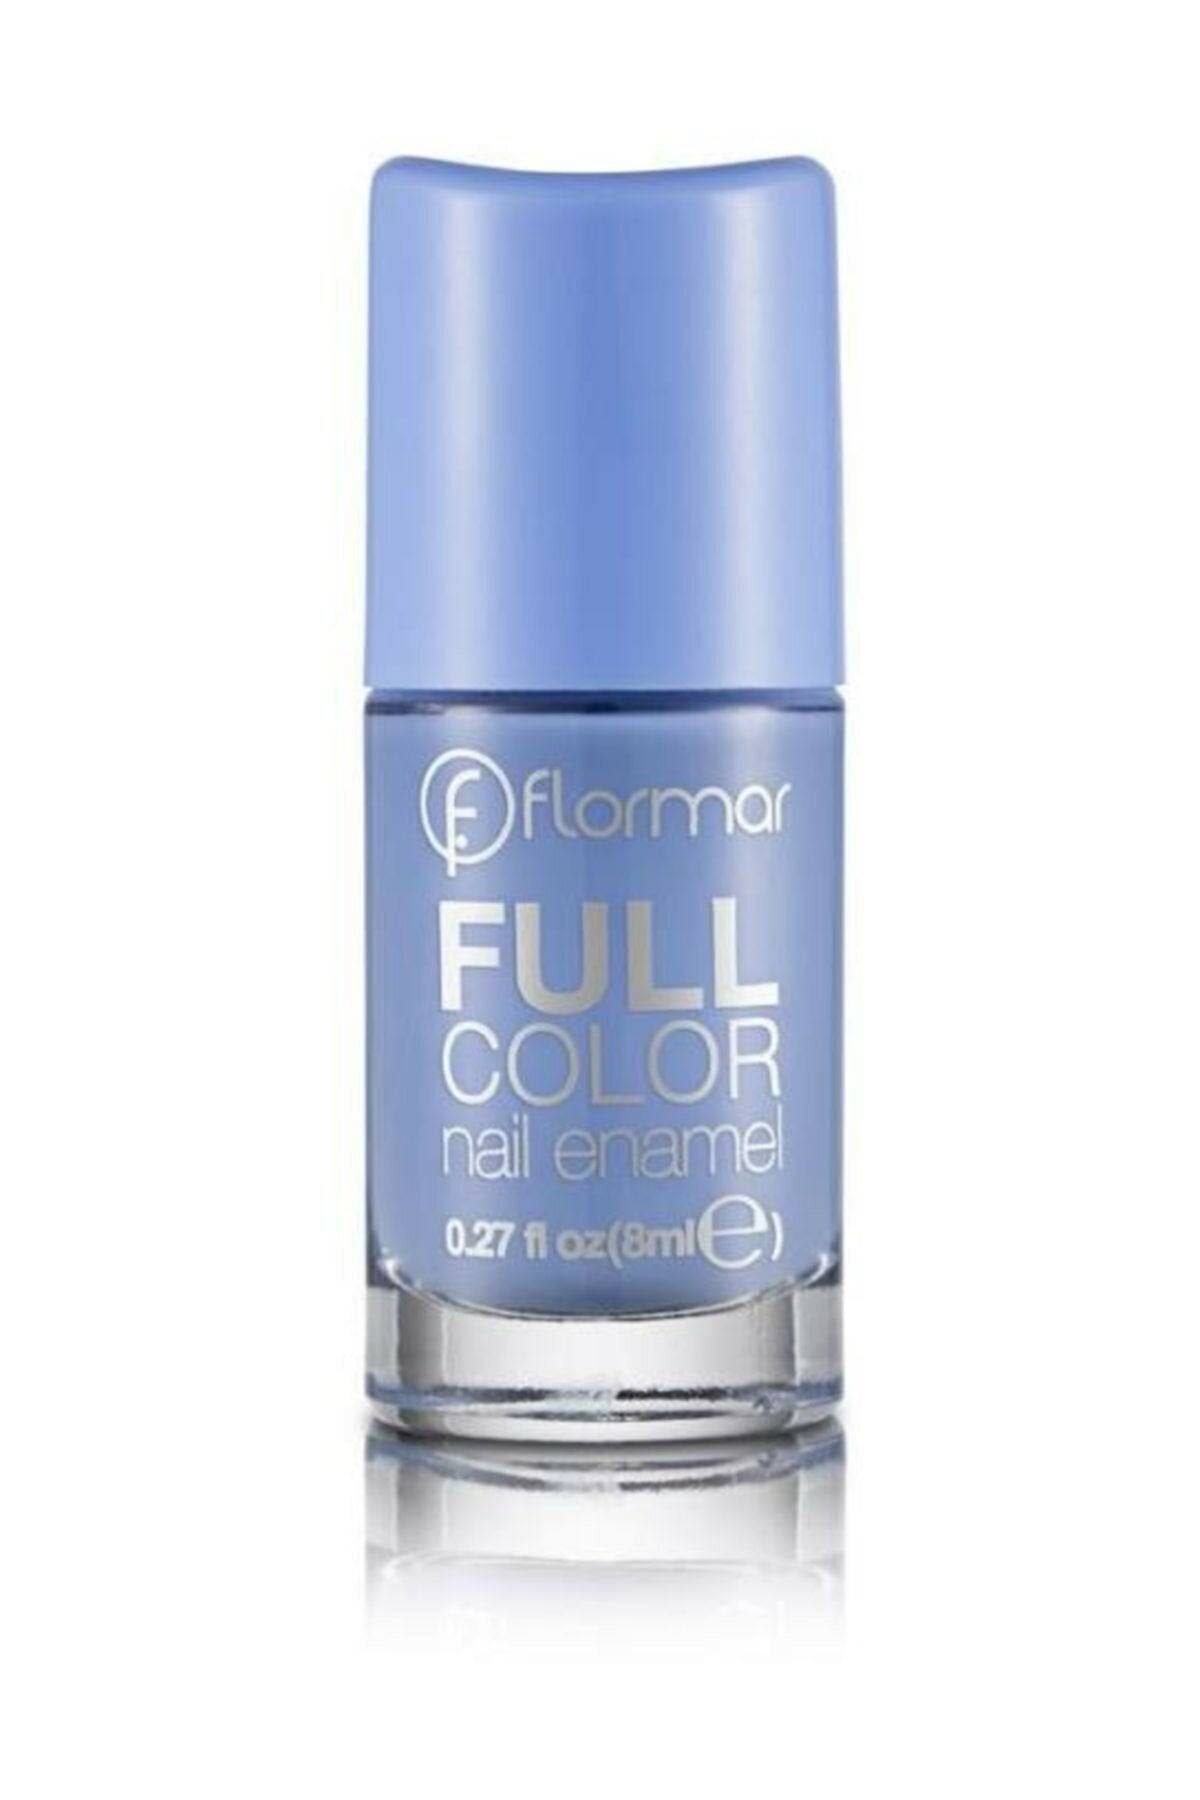 Flormar Full Colour Nail Enamel - Fc16